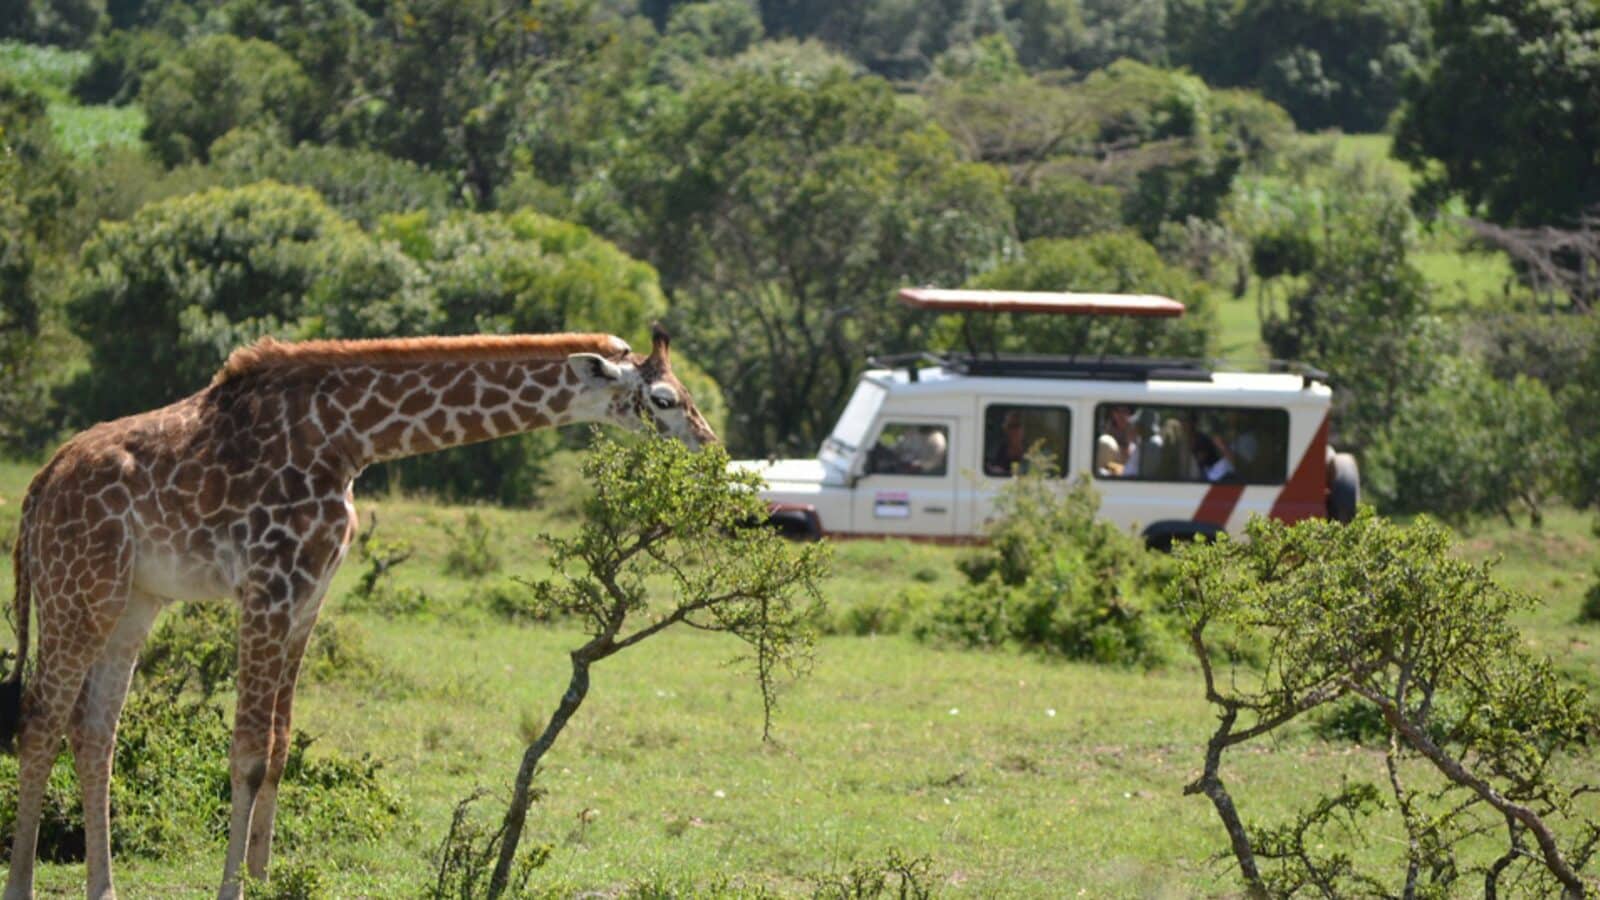 Globus safari vehicle with giraffe in foreground